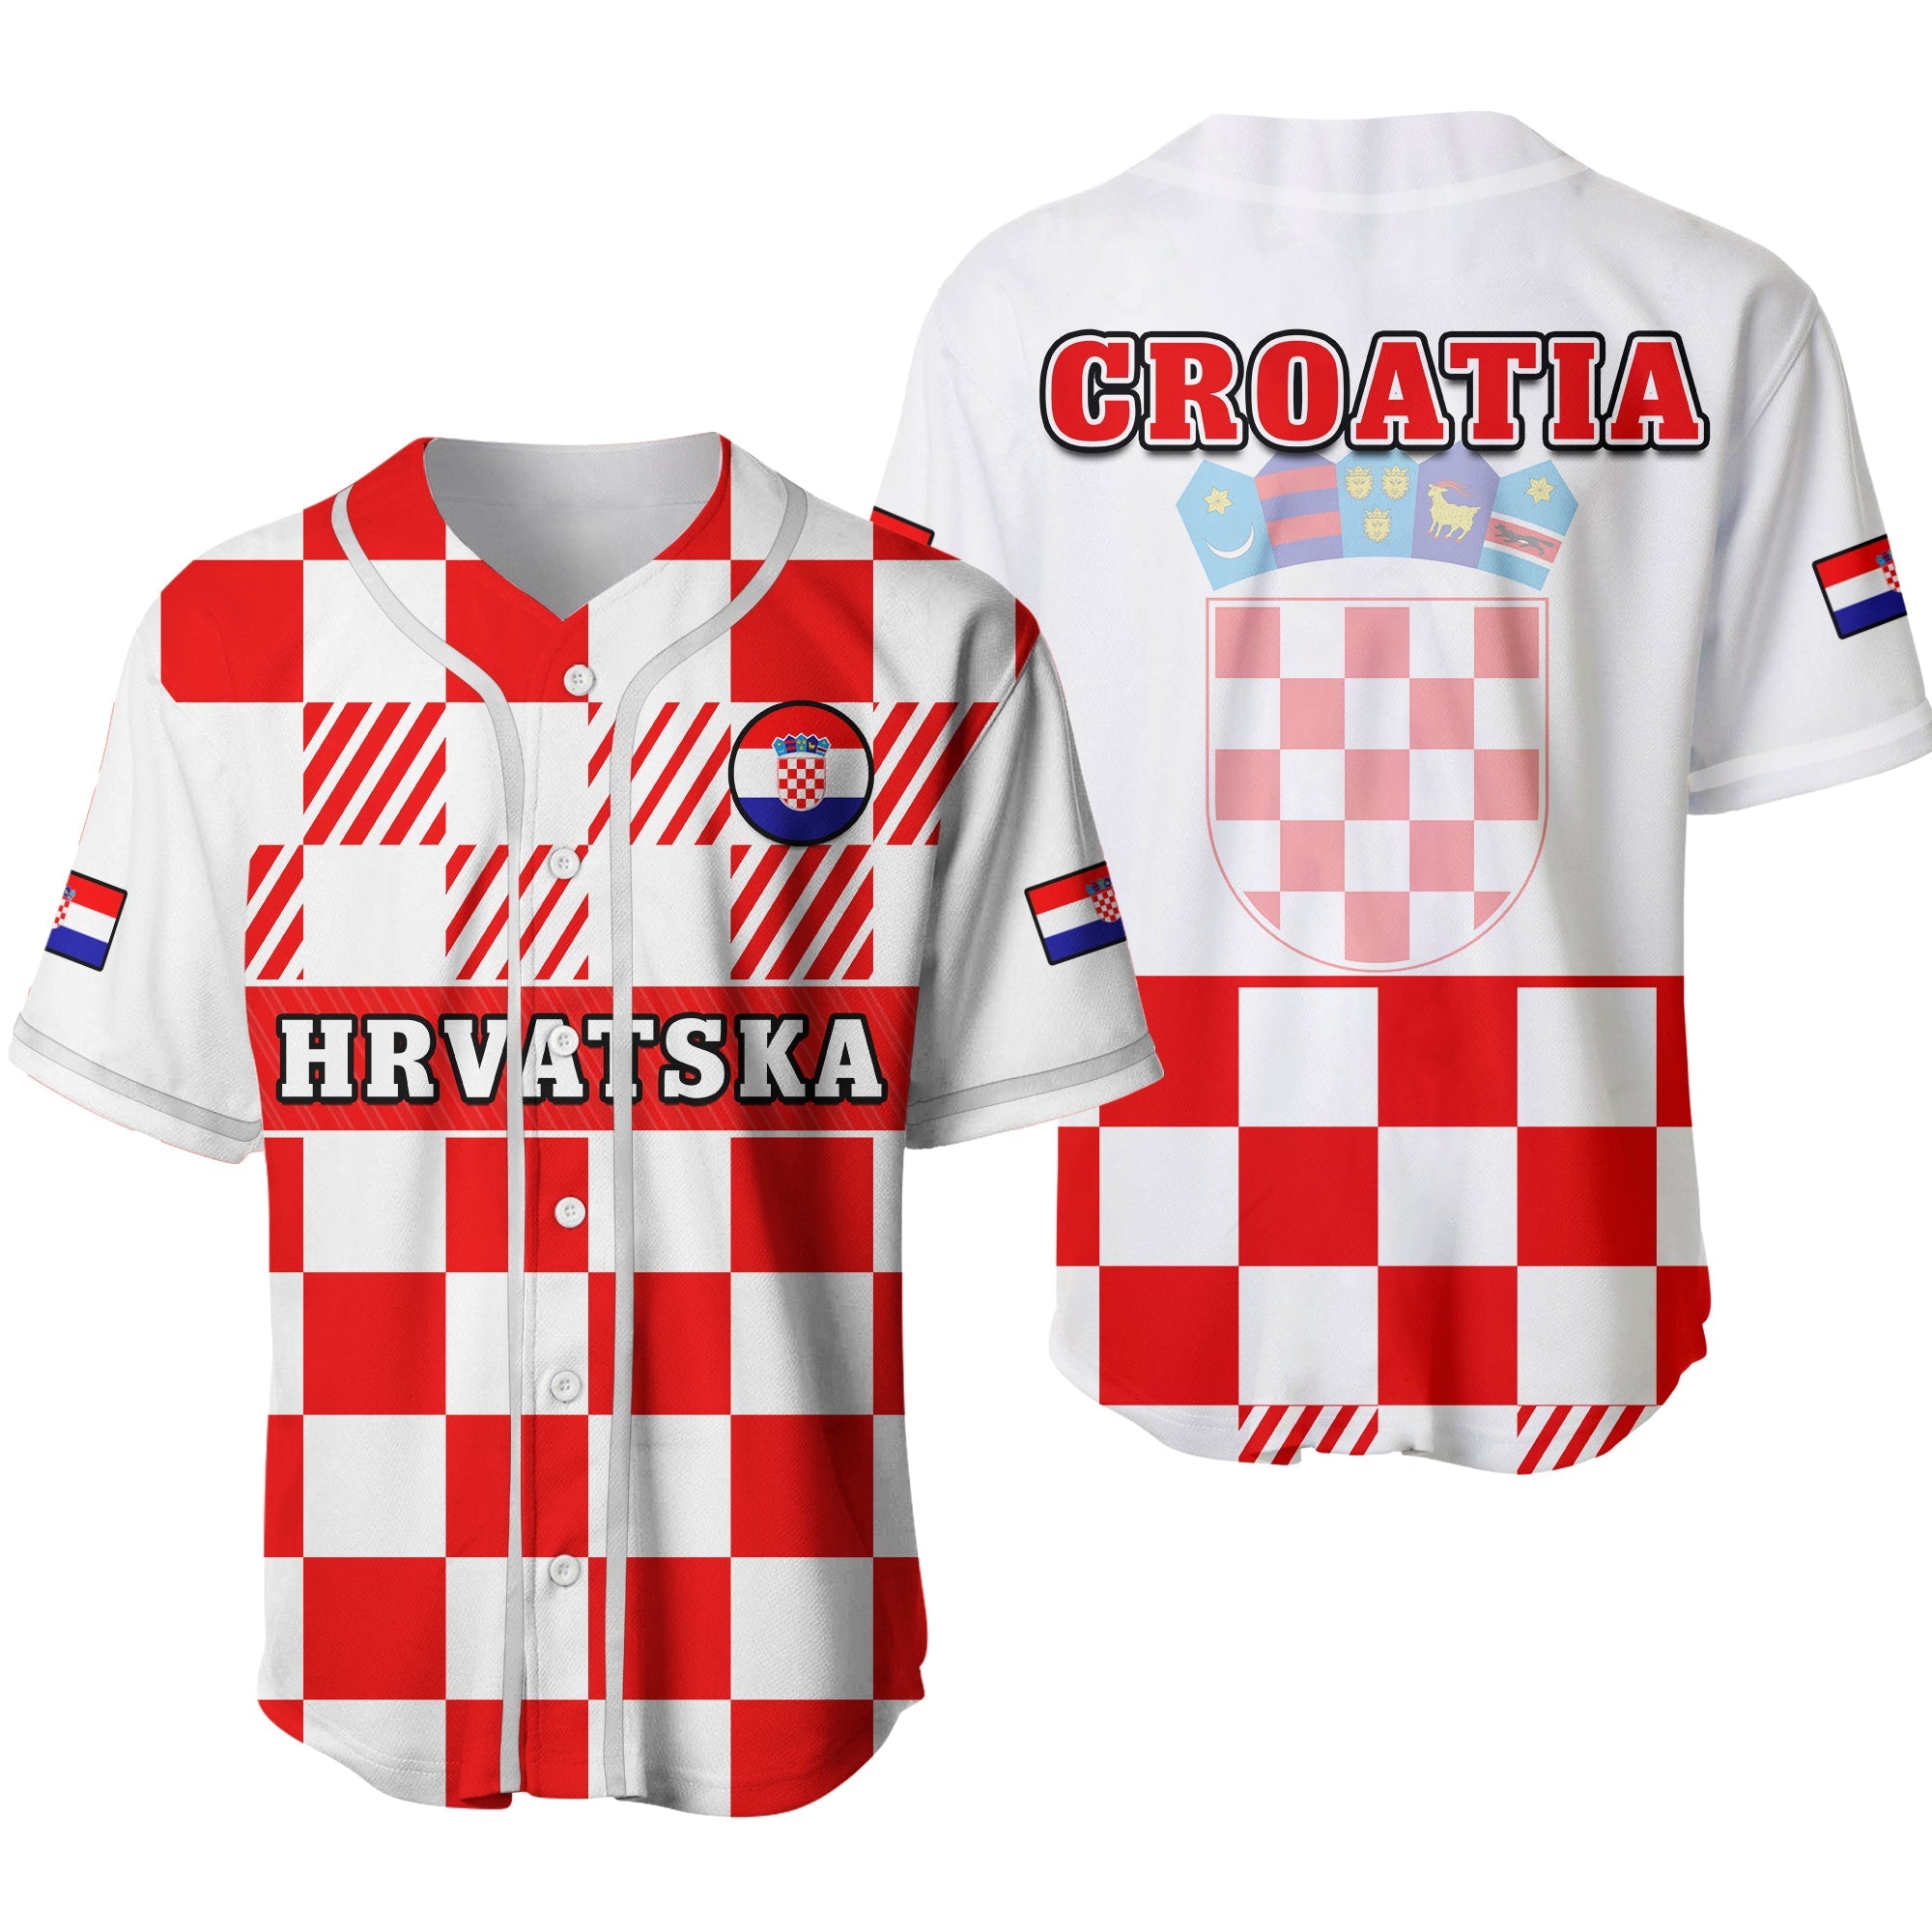 croatia-football-baseball-jersey-hrvatska-checkerboard-red-version-ver02